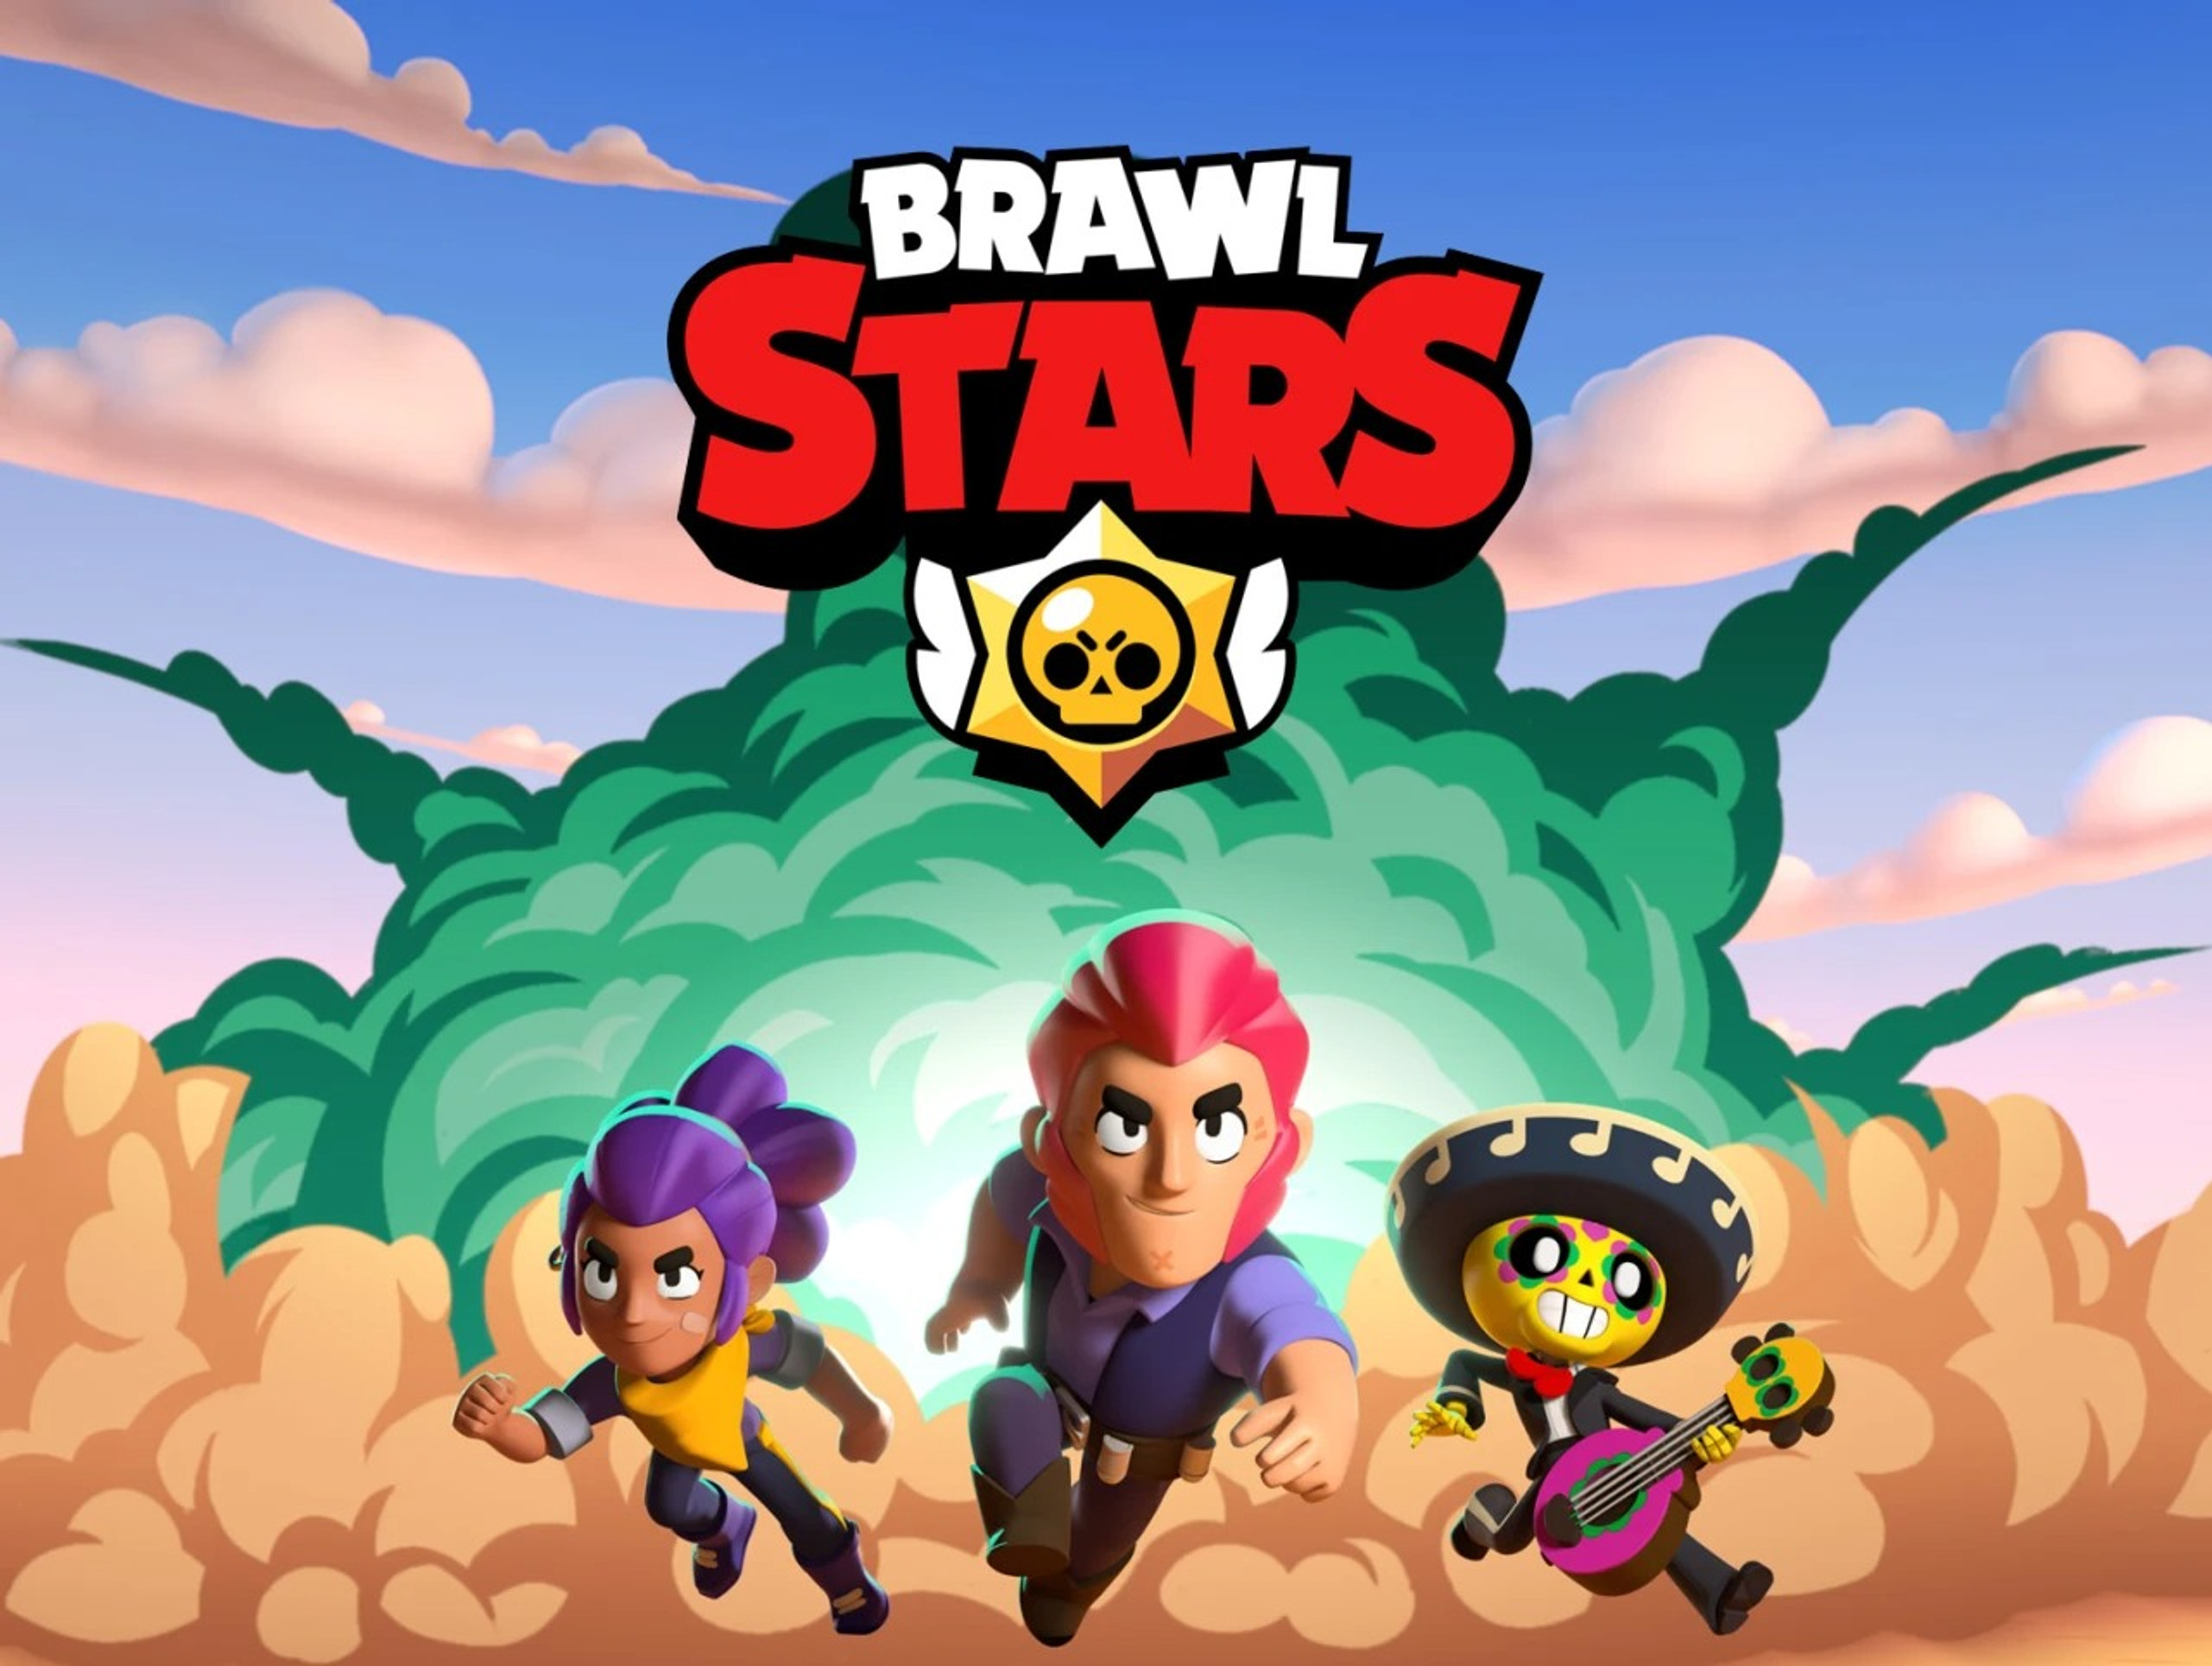 brawl-stars